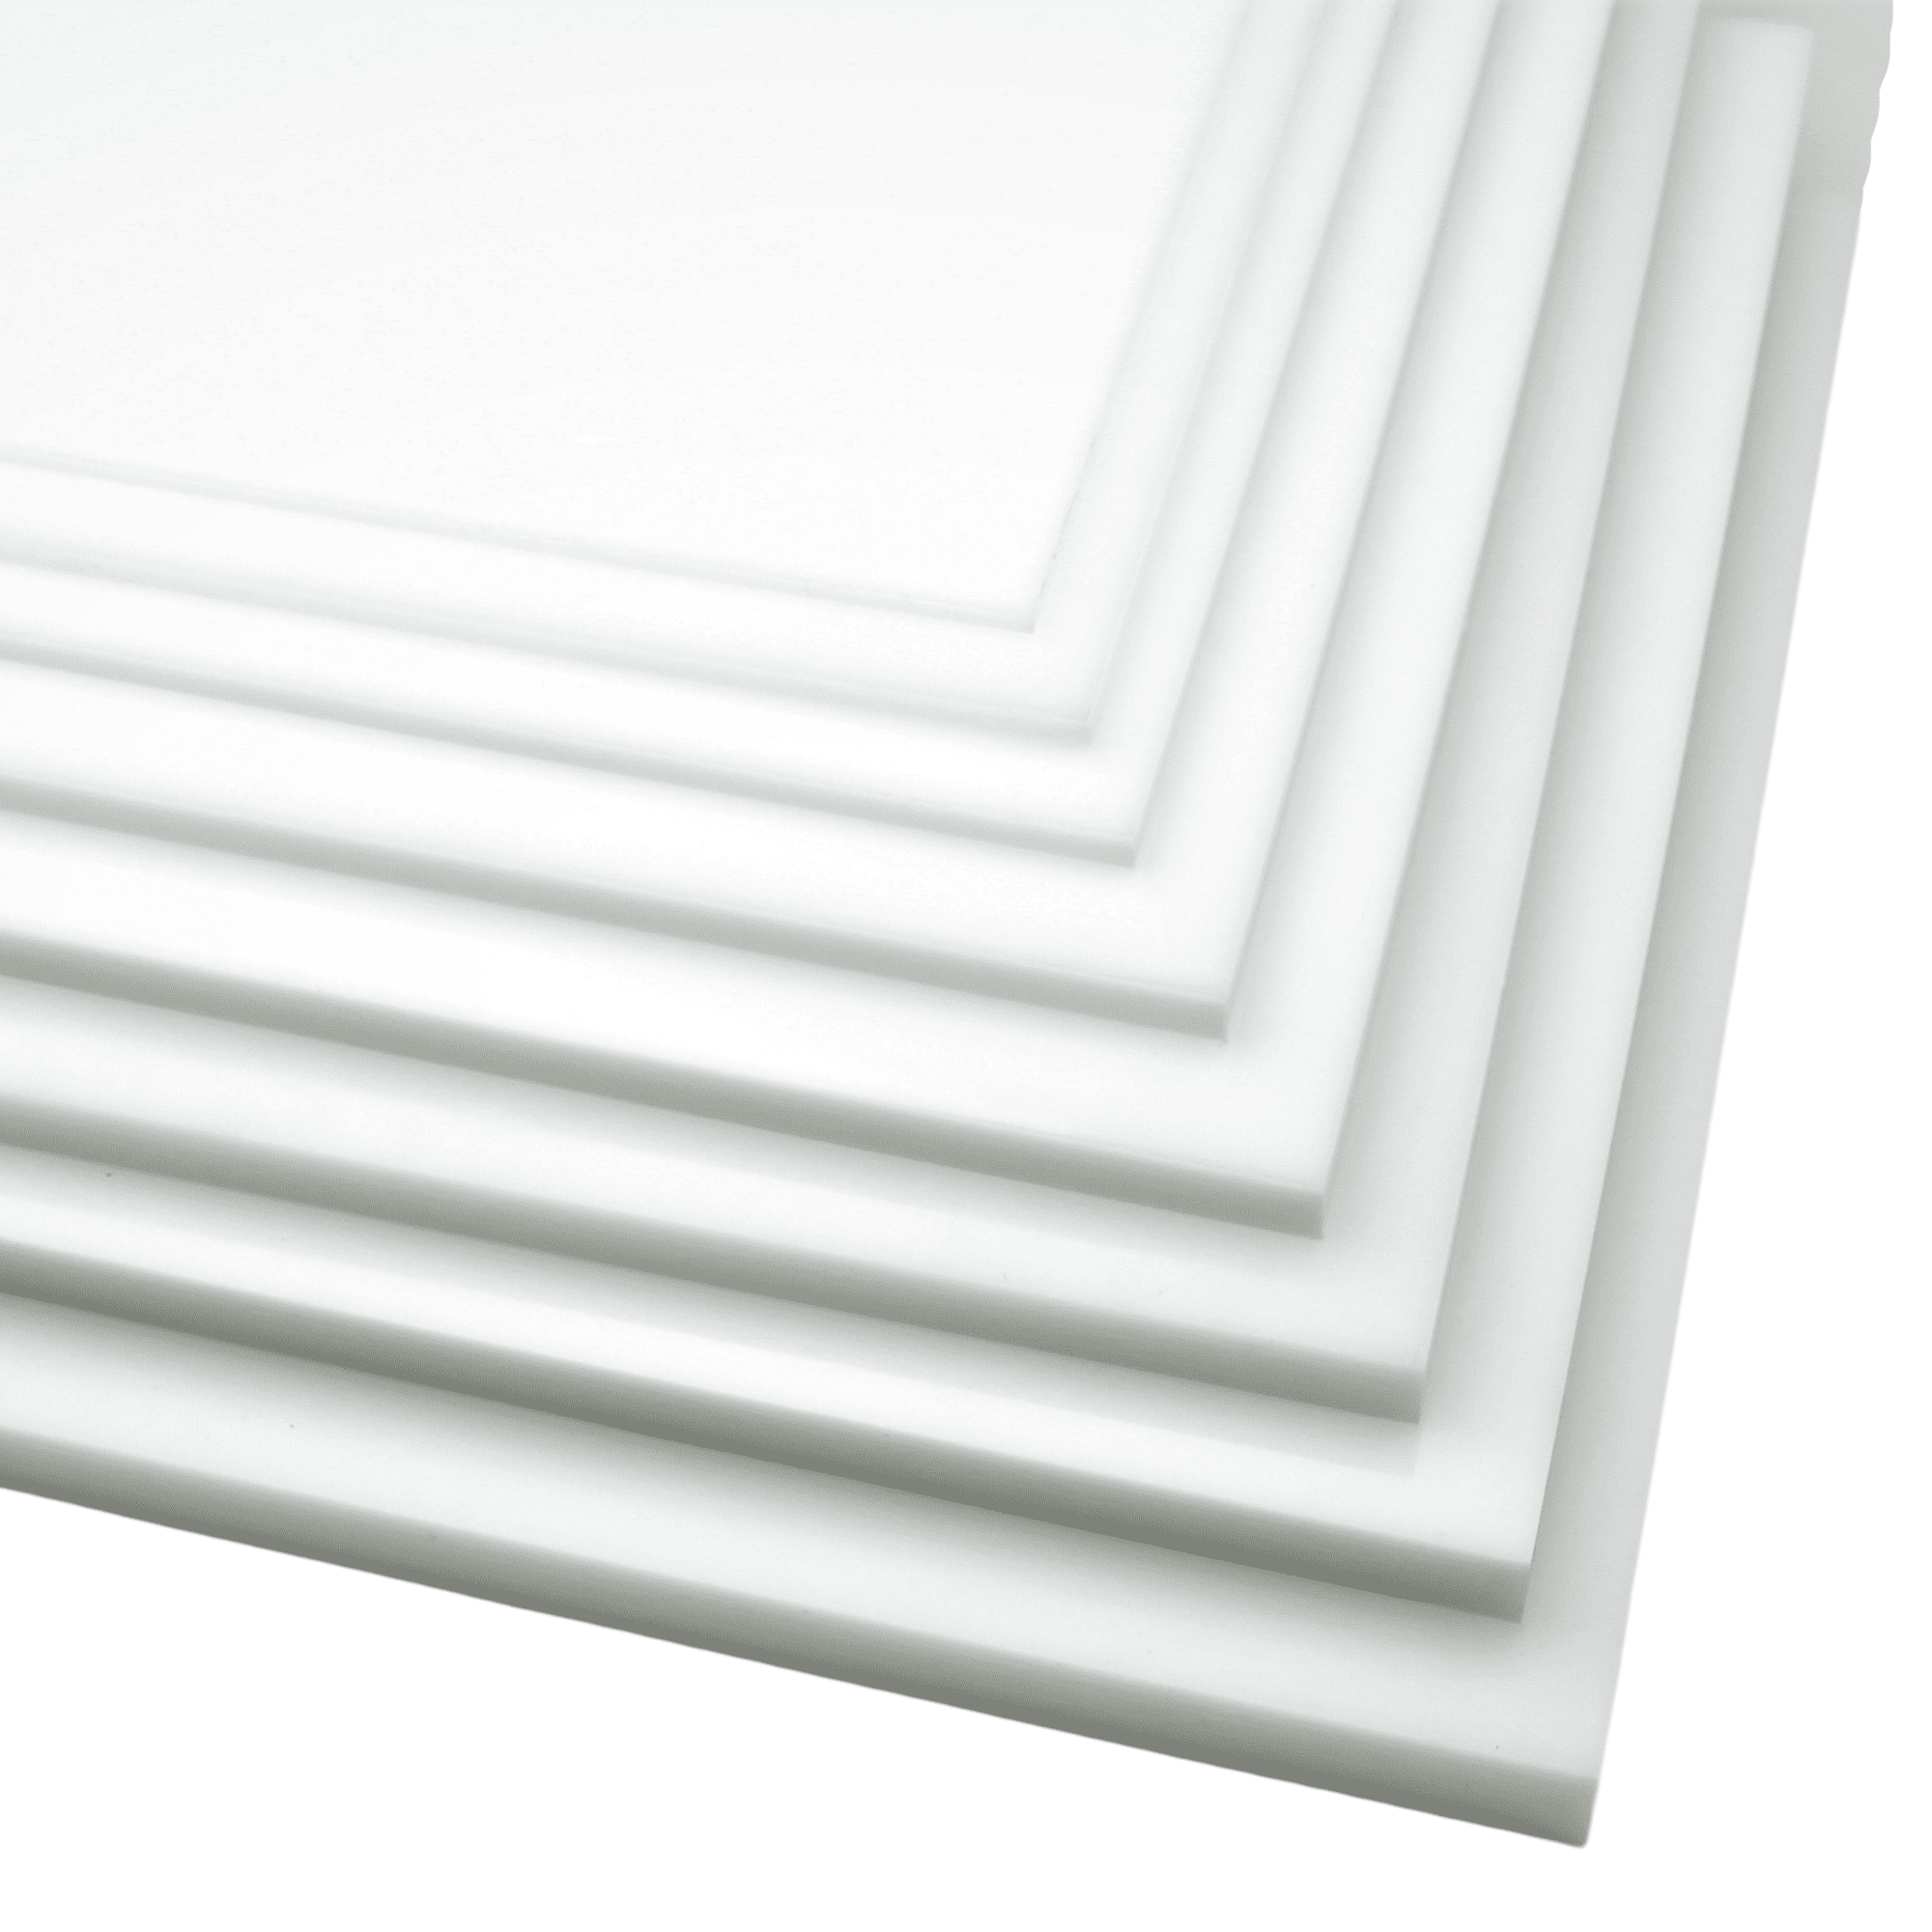 HDPE High Density Polyethylene Plastic Sheet 1/4" x 24" x 24” White Smooth 